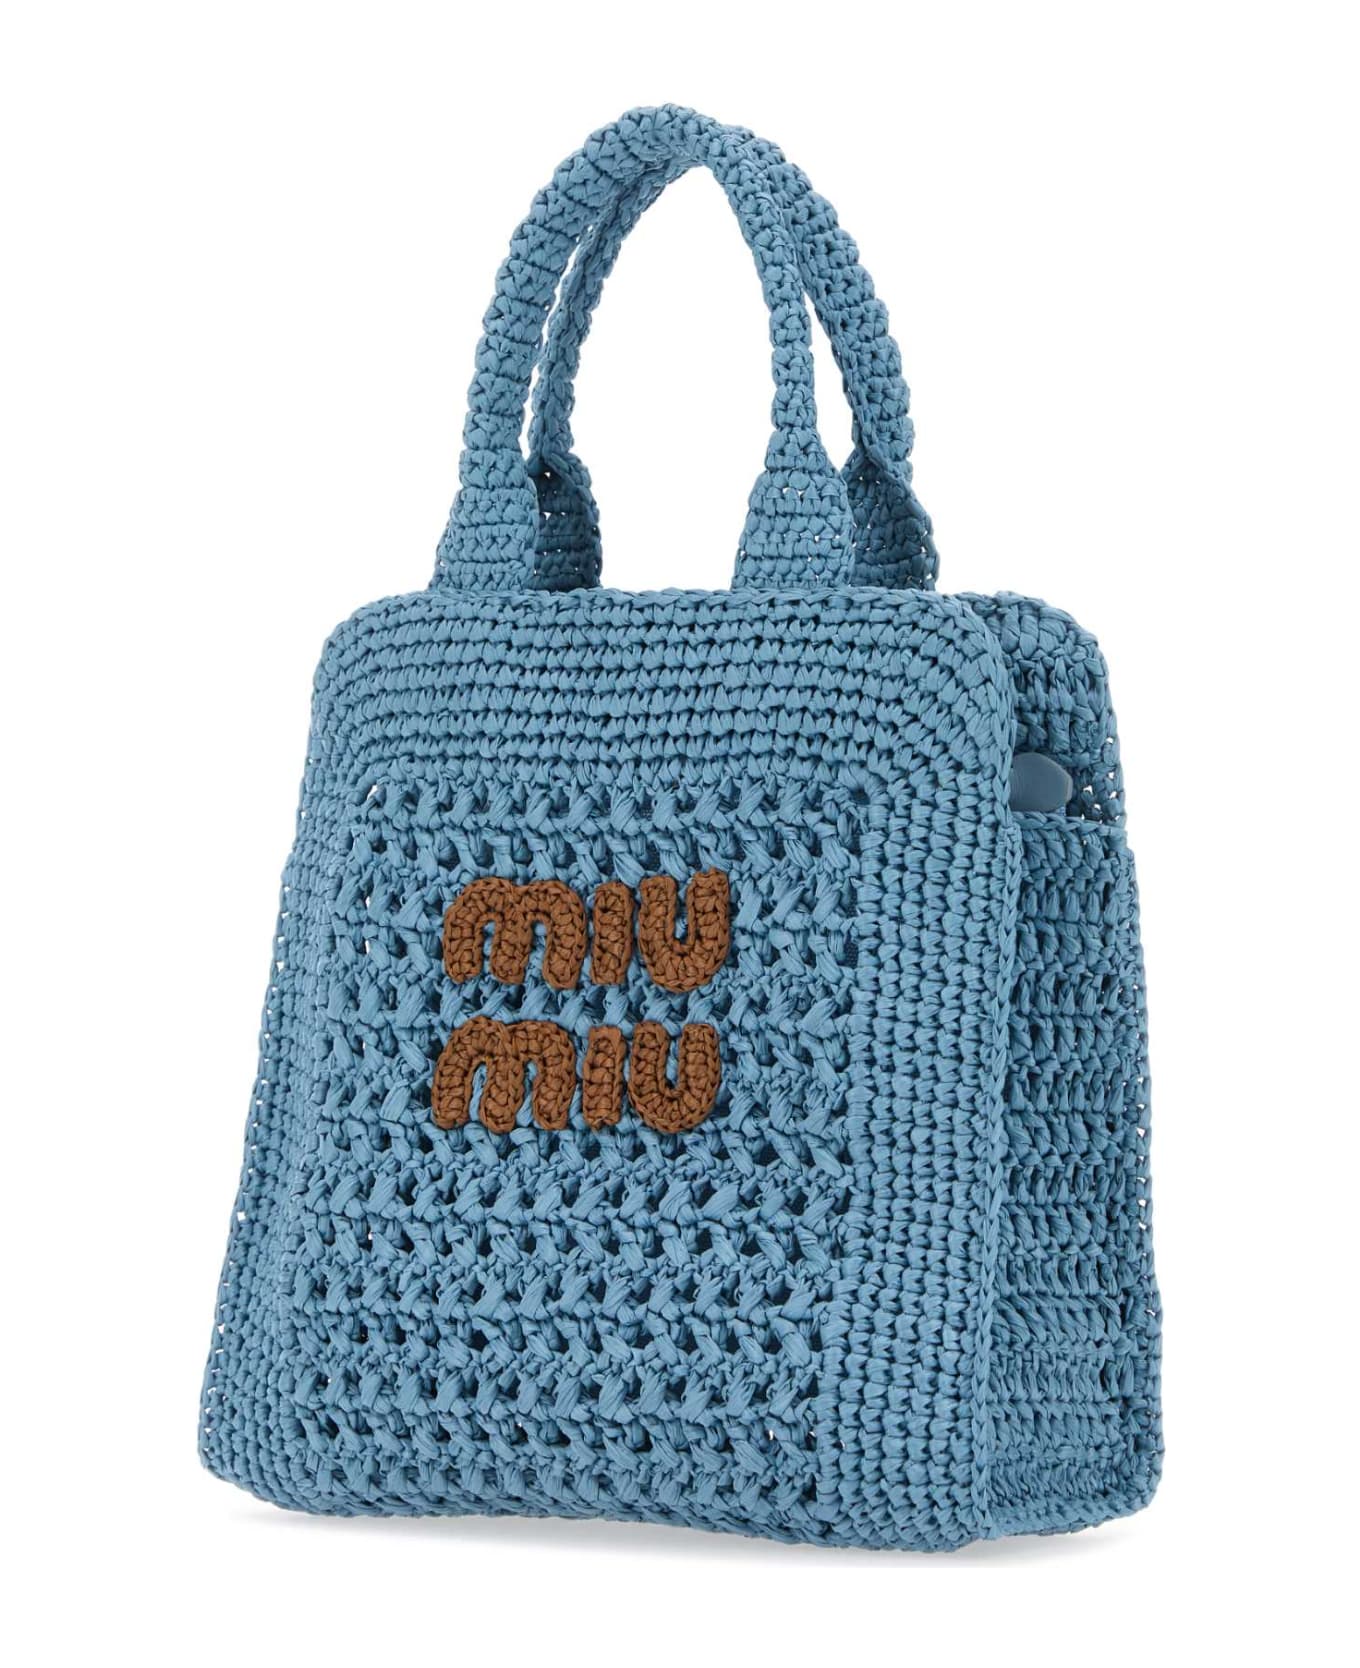 Miu Miu Light Blue Crochet Handbag - CELESTECOGNAC